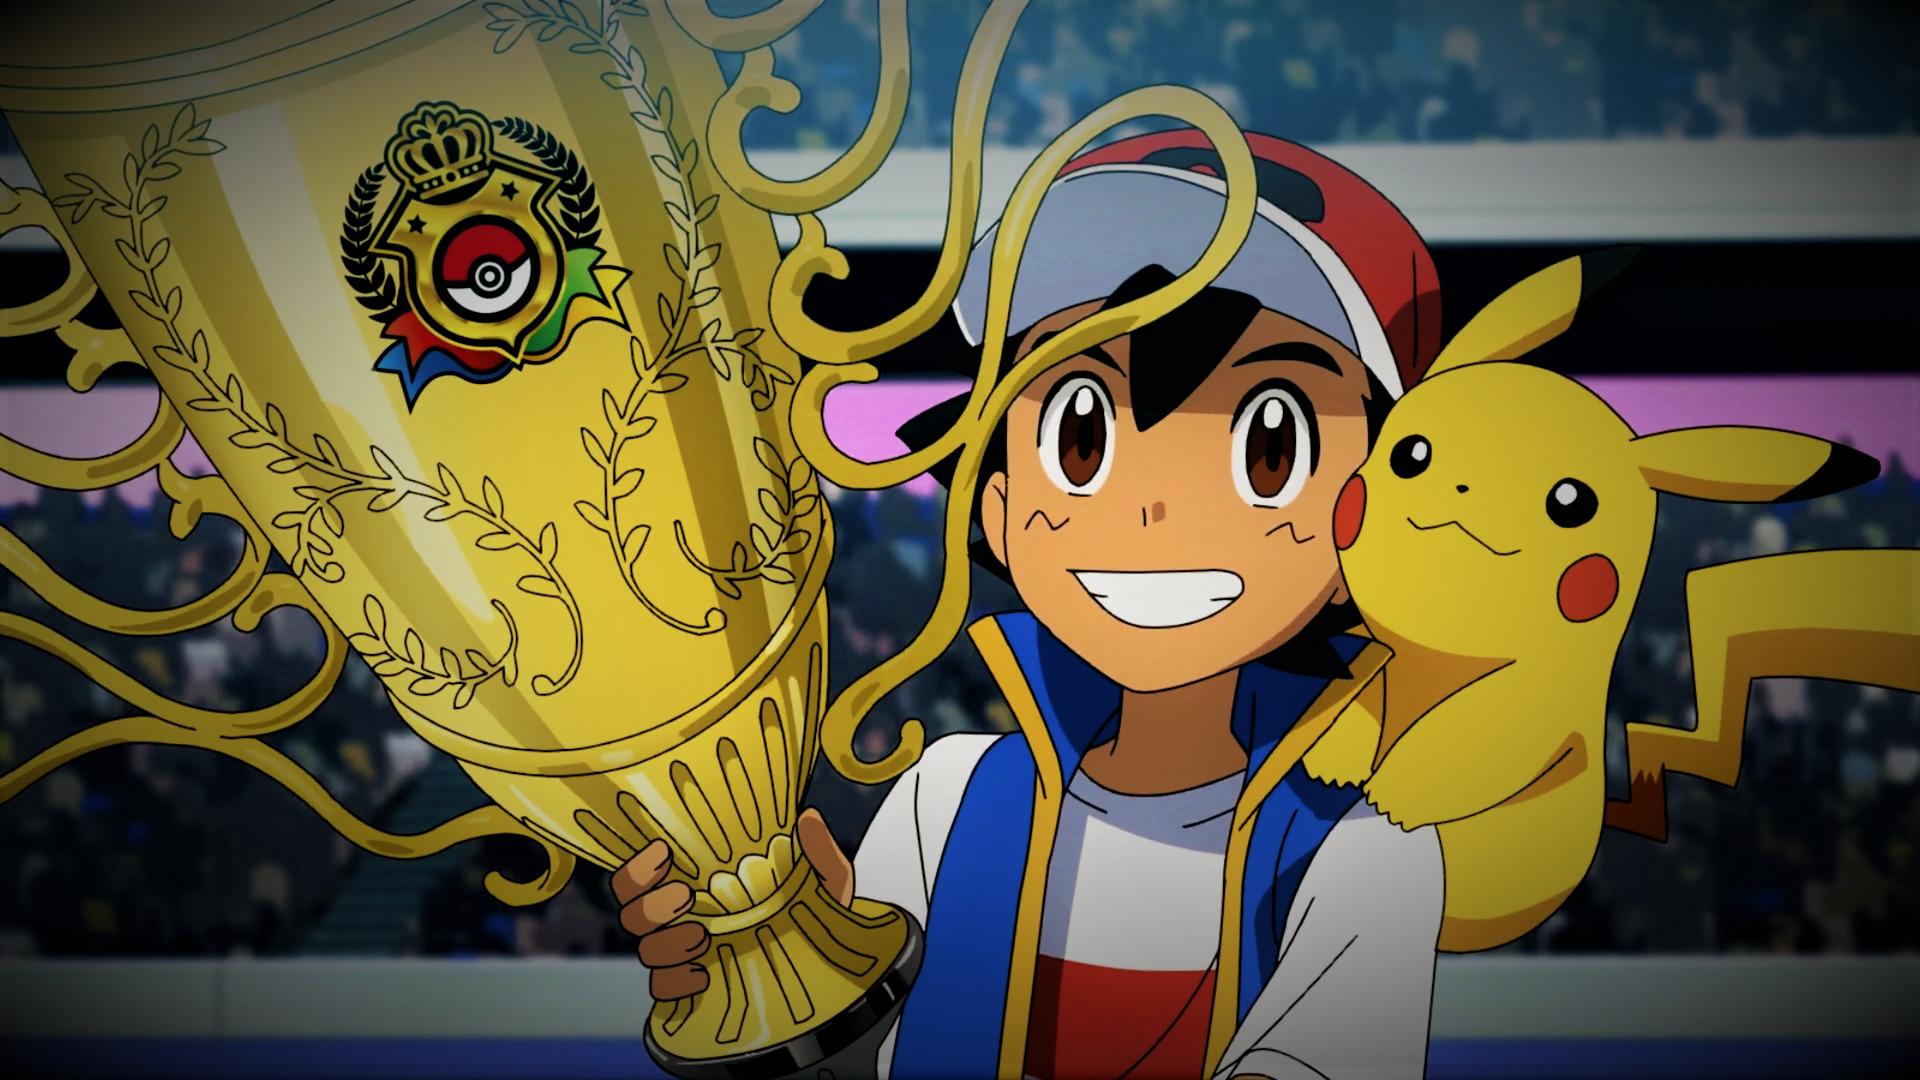 How this Pikachu stole the Pokémon World Championship 